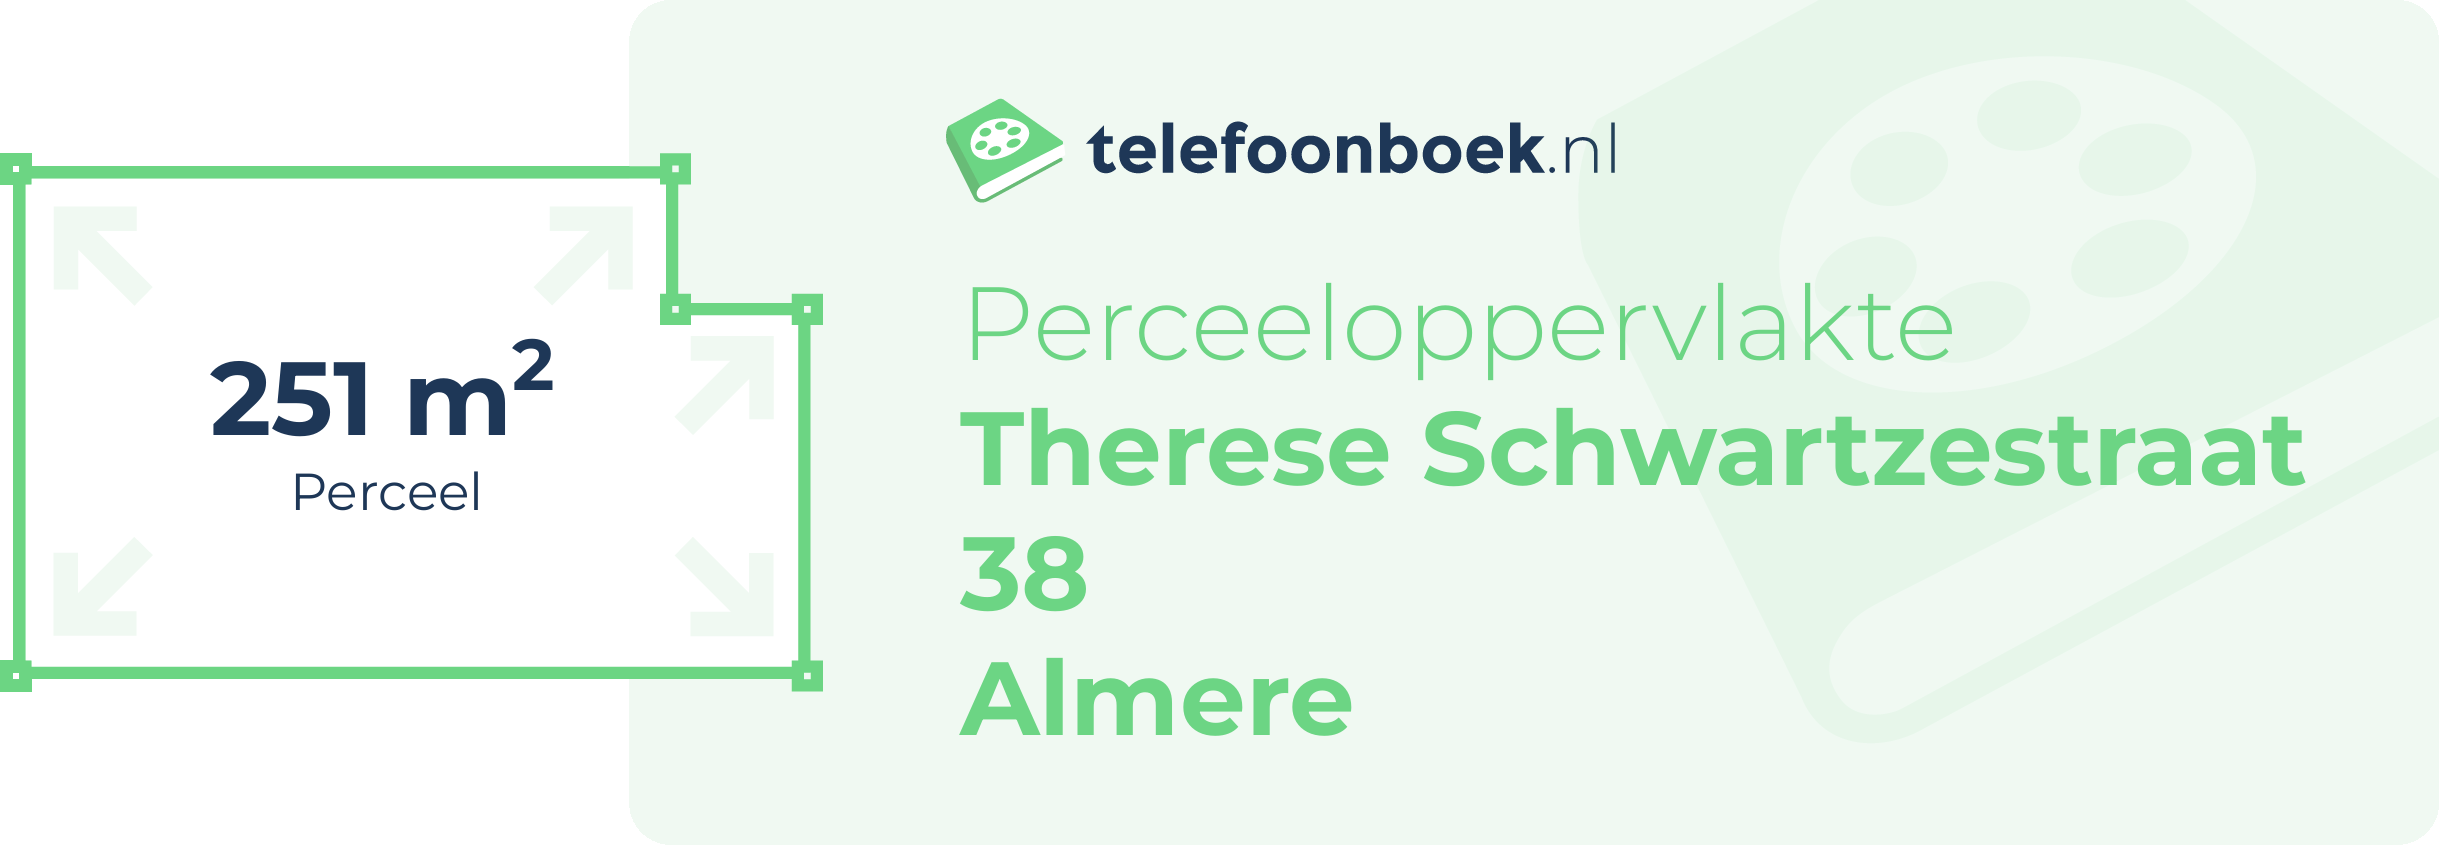 Perceeloppervlakte Therese Schwartzestraat 38 Almere